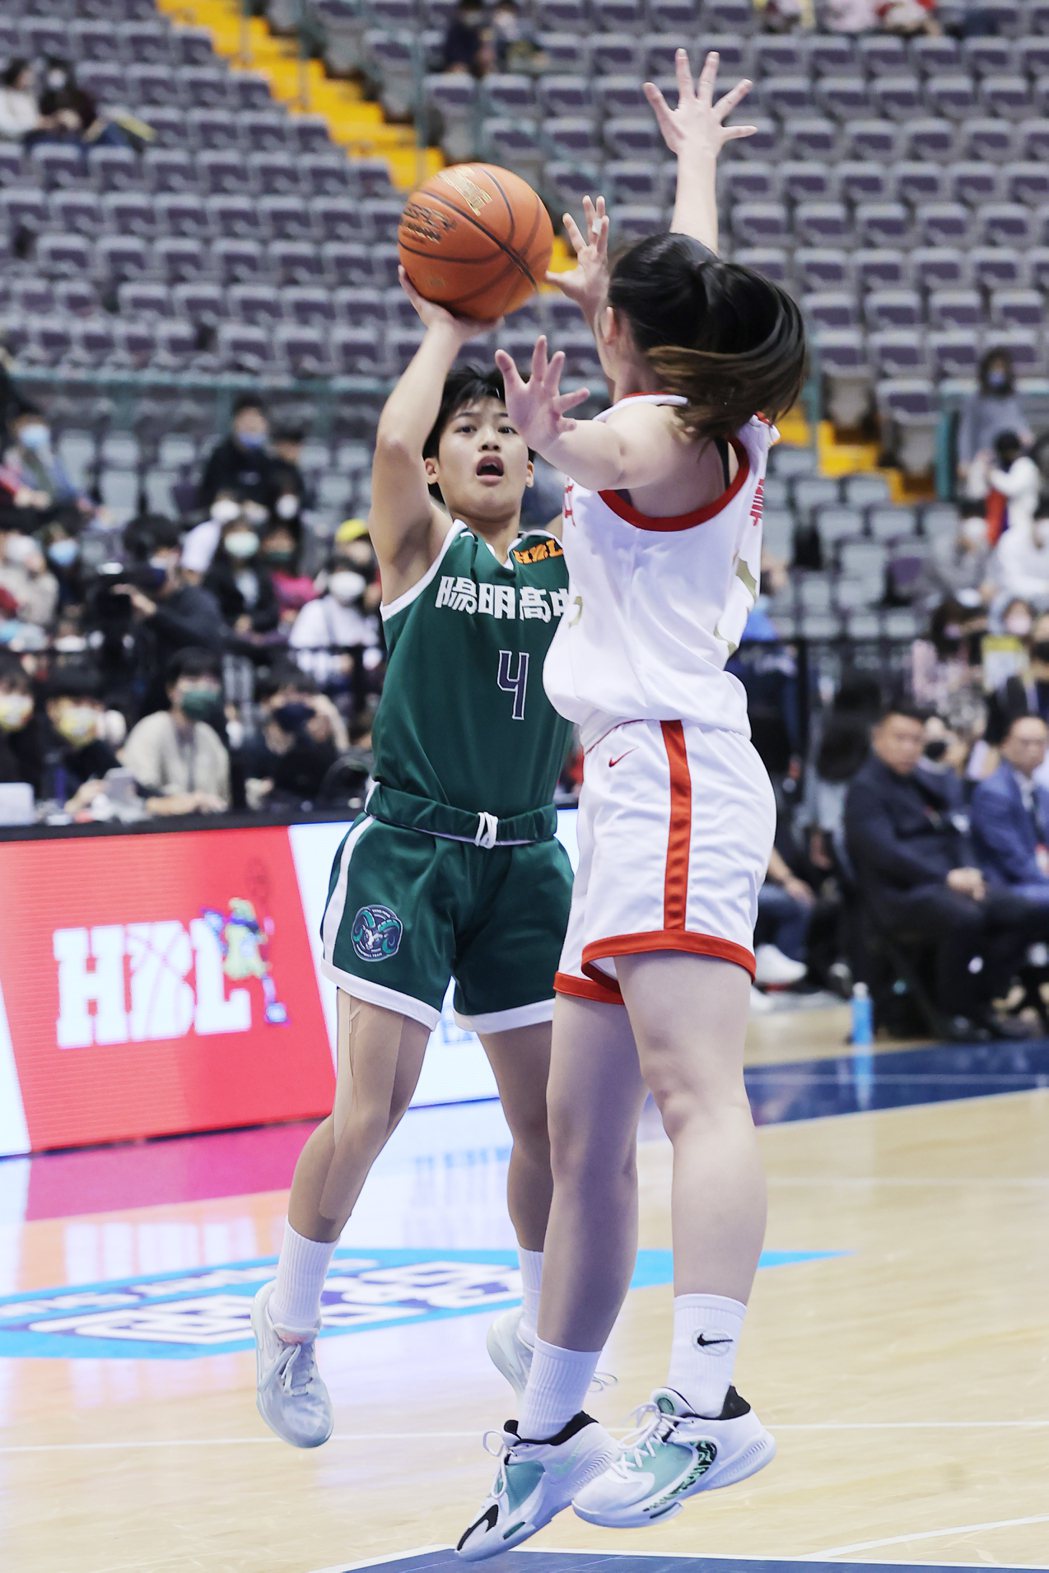 HBL高中籃球聯賽今天在台北小巨蛋登場，上午進行女子組季軍賽由南山高中對上陽明高